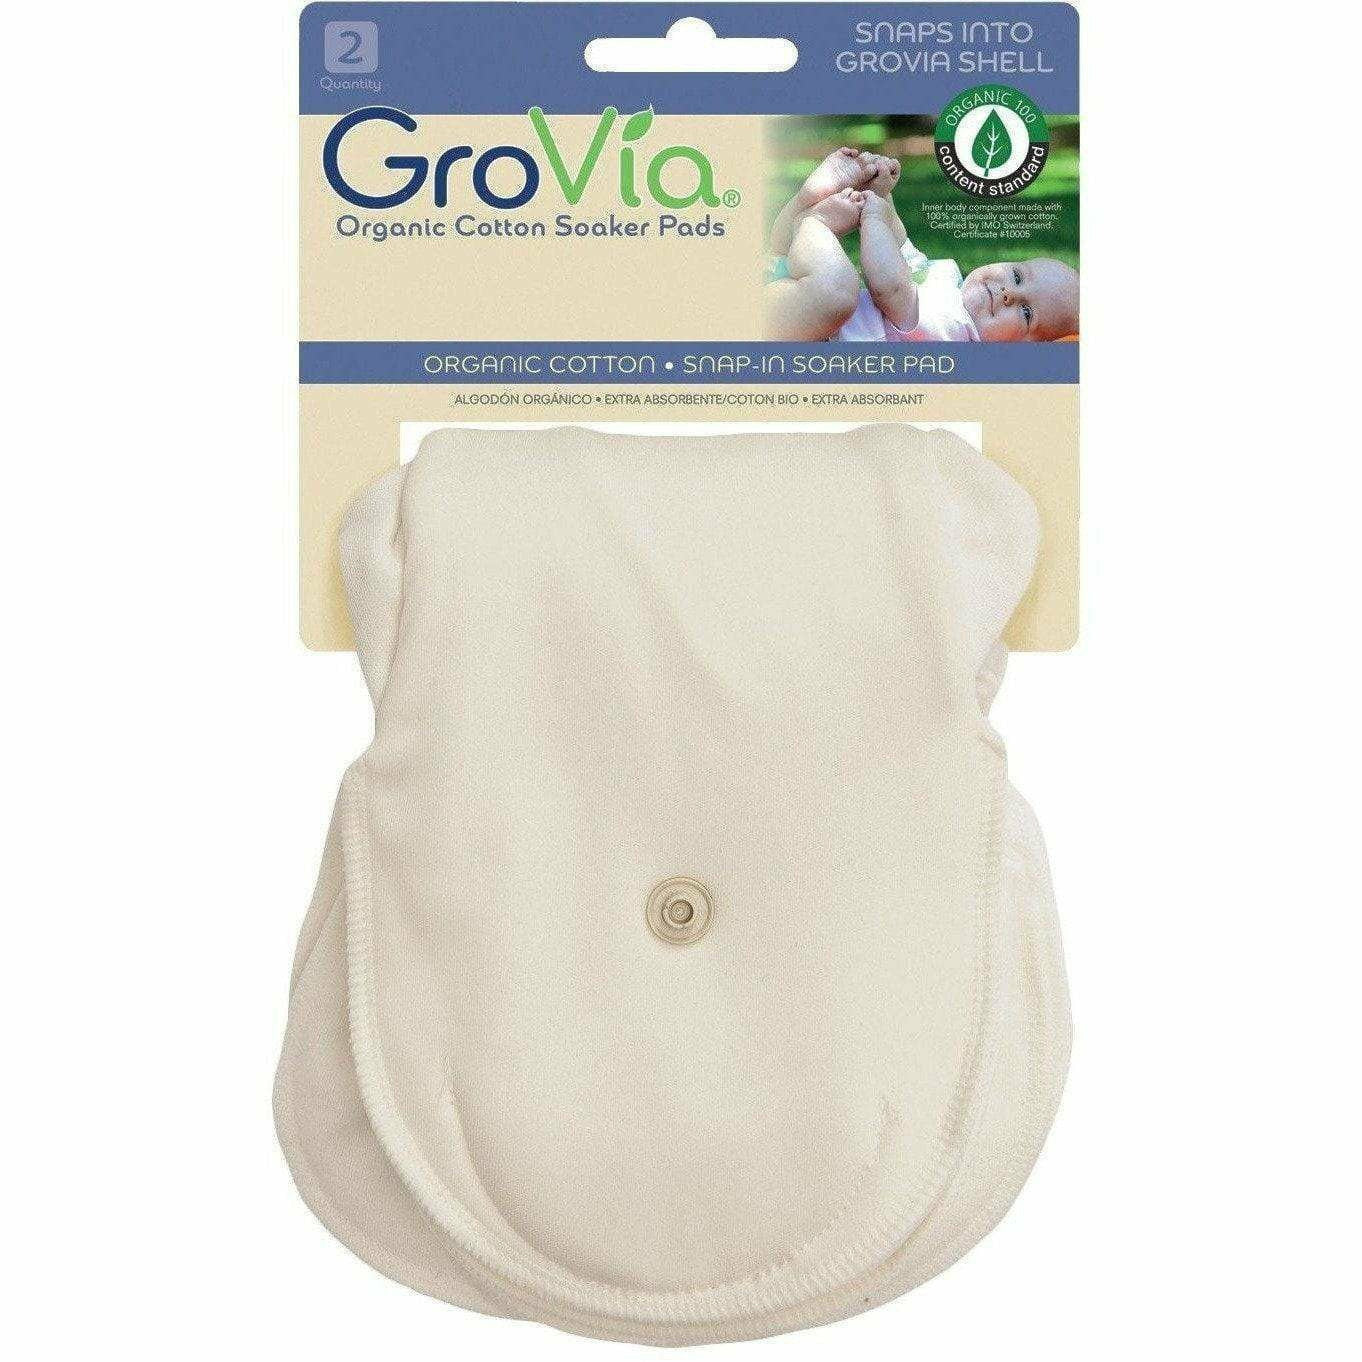 GroVia Organic Cotton Soaker Pad